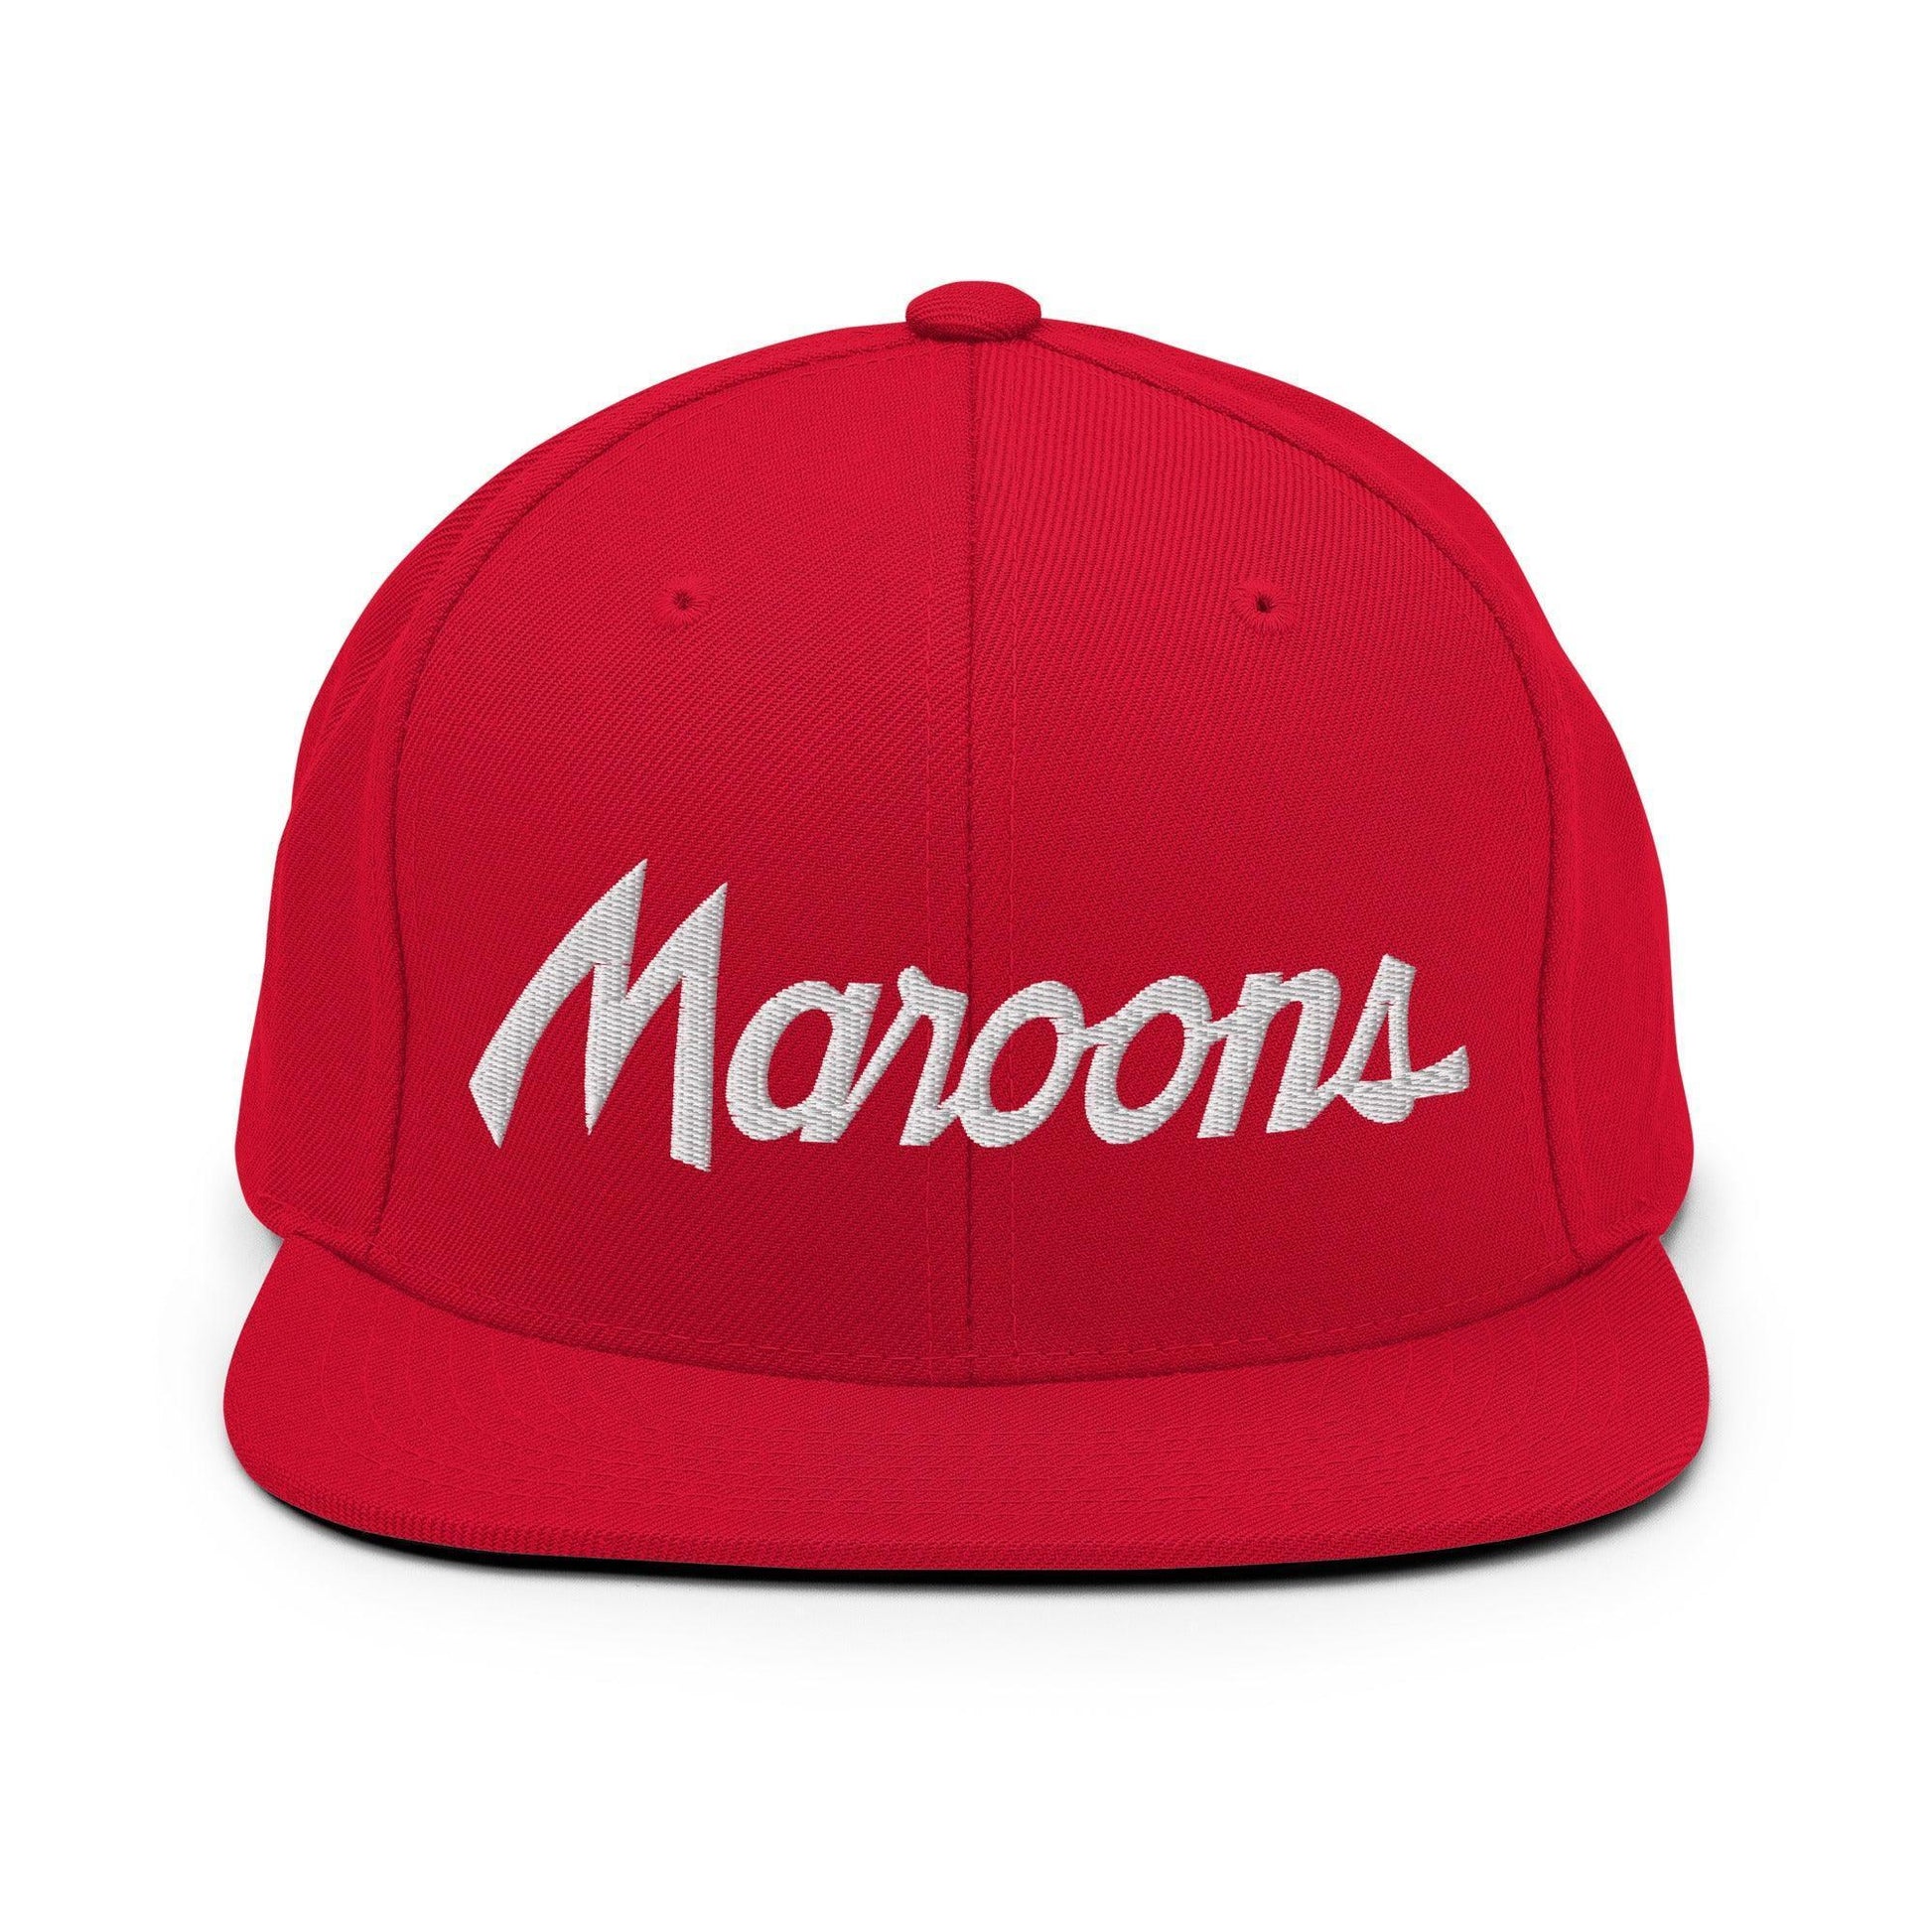 Maroons School Mascot Script Snapback Hat Red